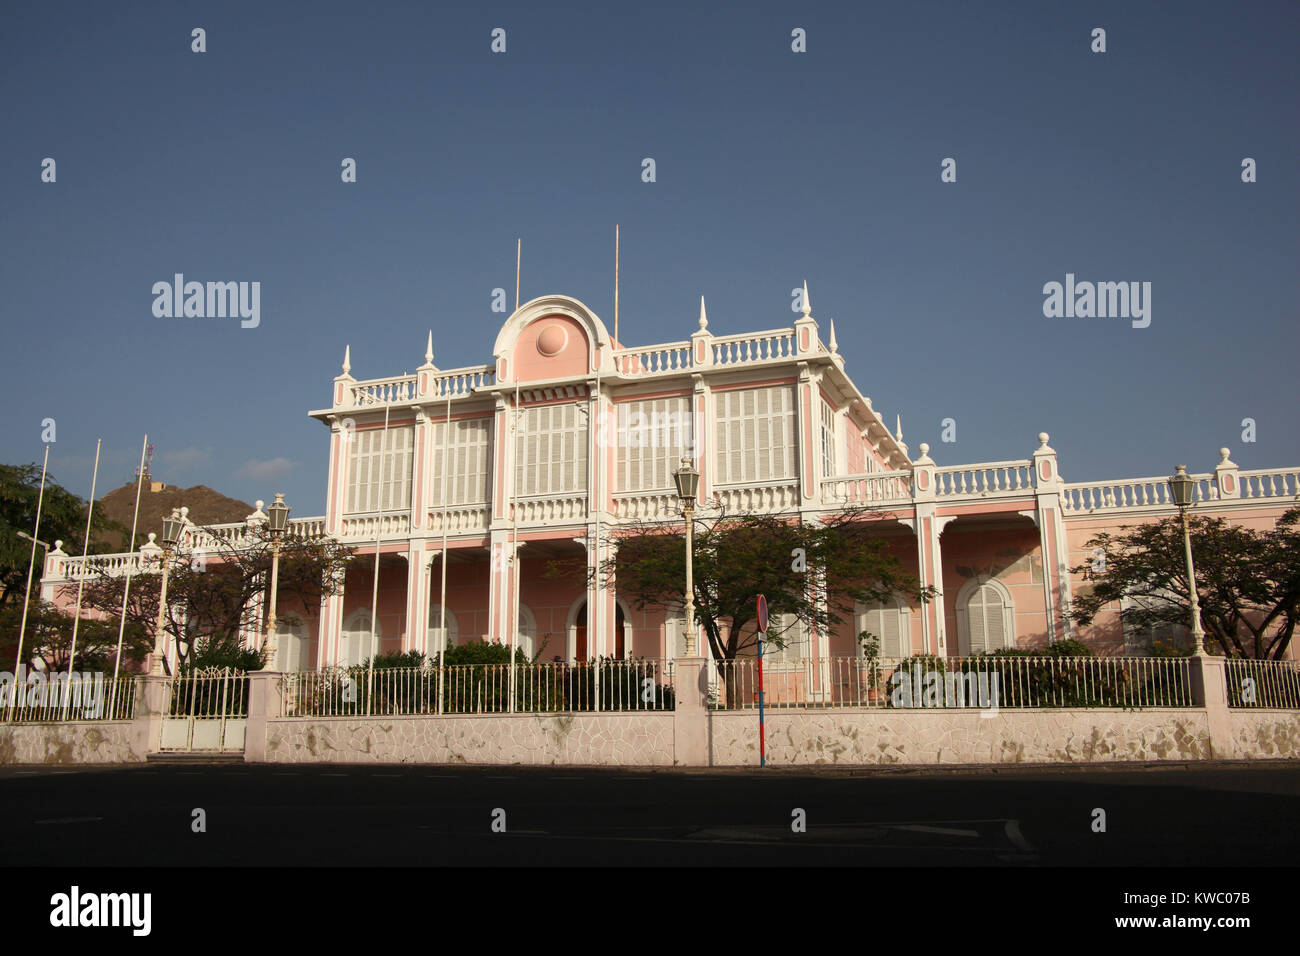 Palácio do Povo (People's Palace), or Palácio do Mindelo, (formerly the Palácio do Governador Governor's Palace), Mindelo, Cape Verde. Stock Photo